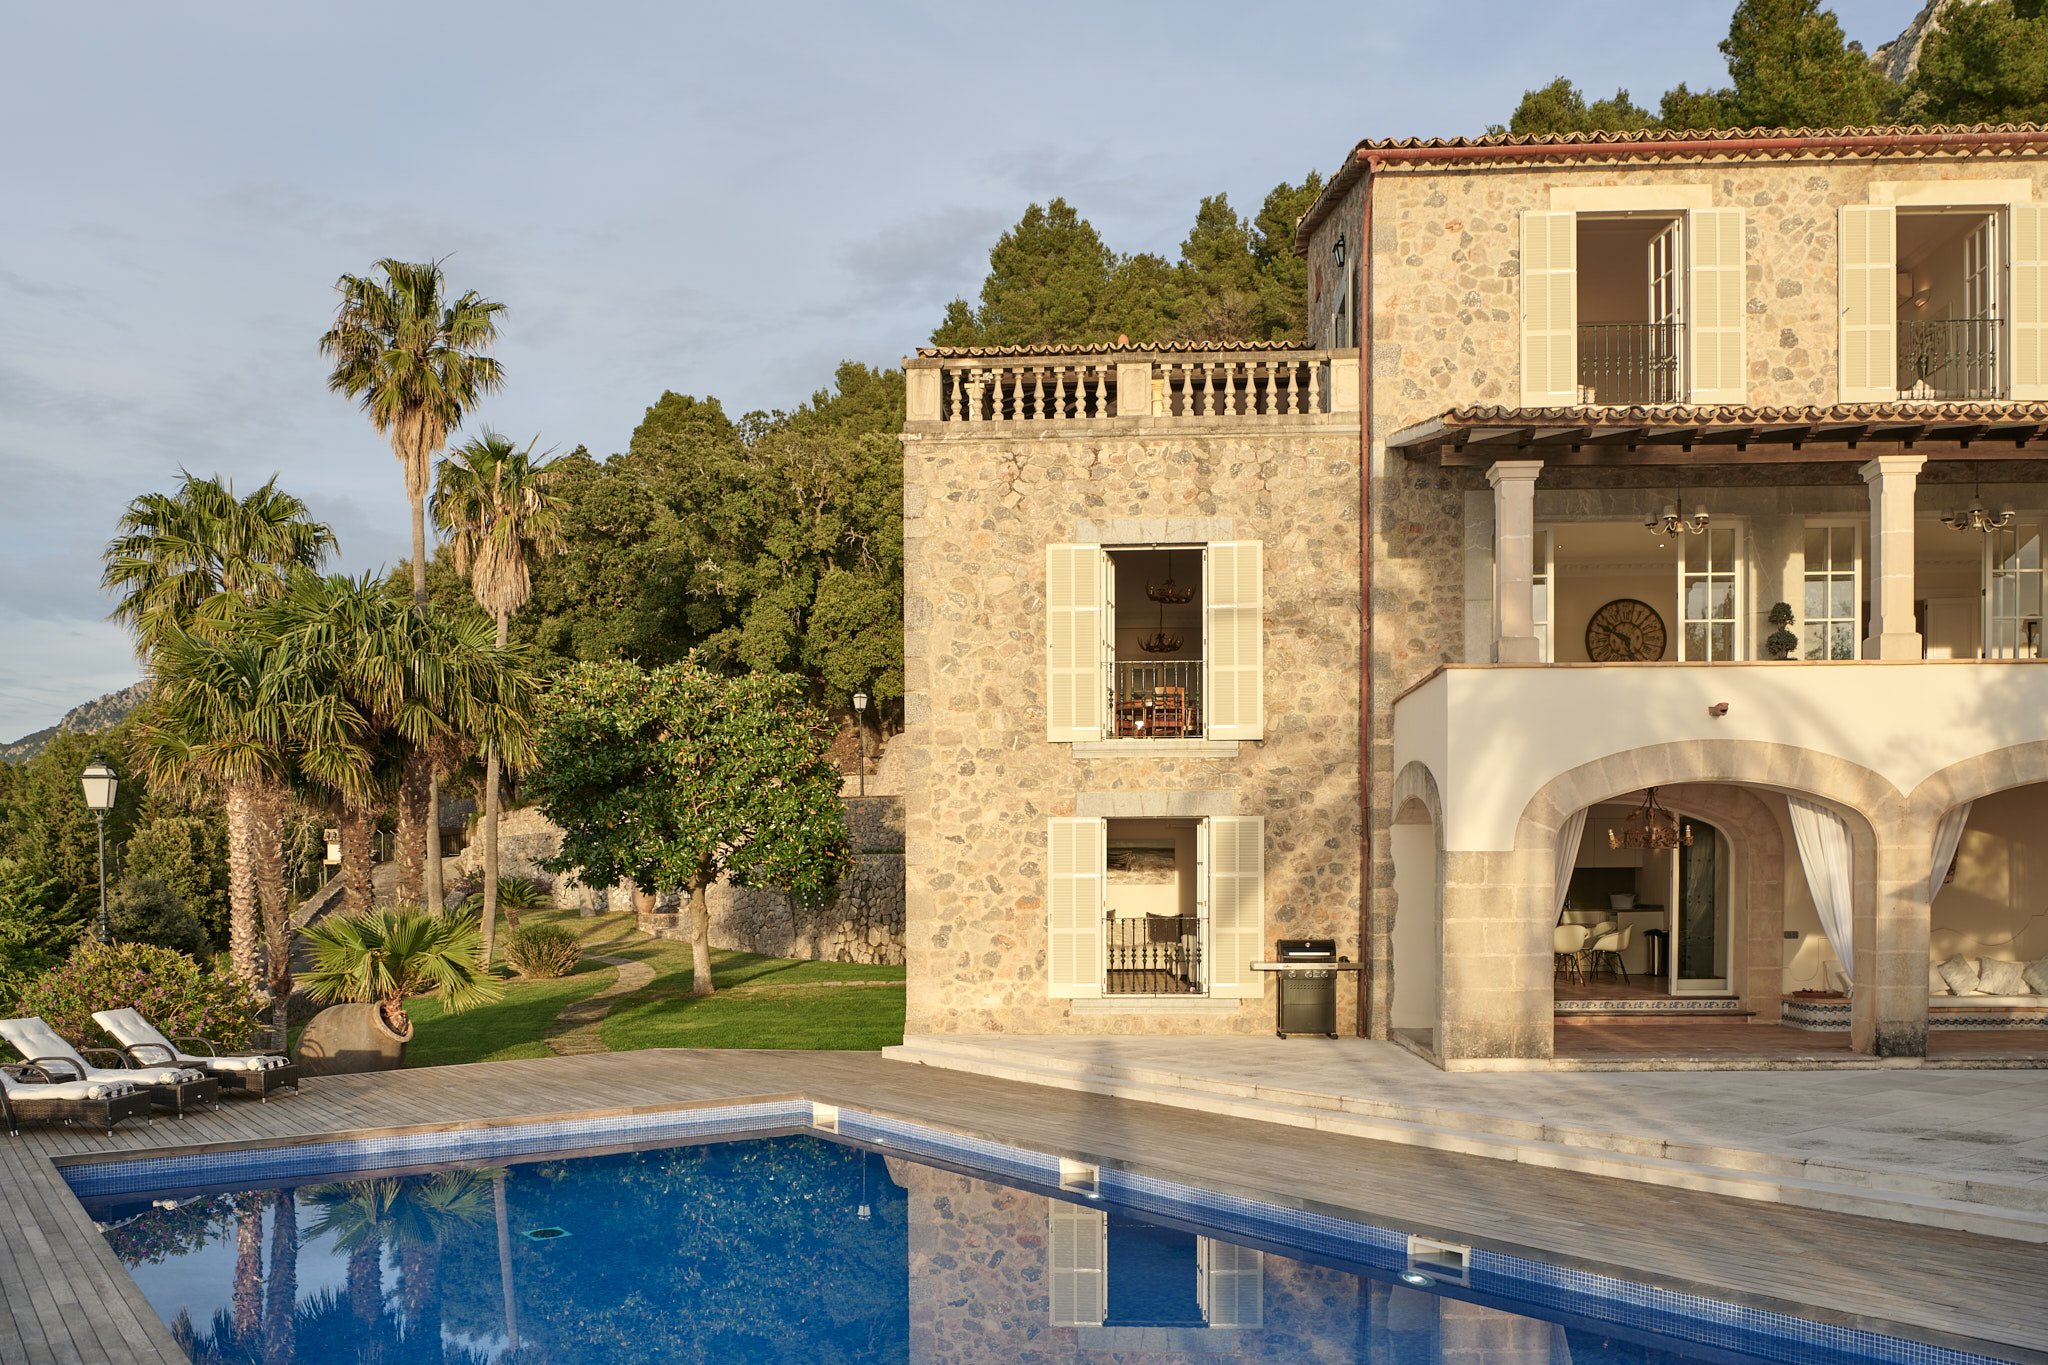 Francis York Can Calo: Historic Estate in Mallorca Built by Archduke Luis Salvador of Habsburg 73.jpg